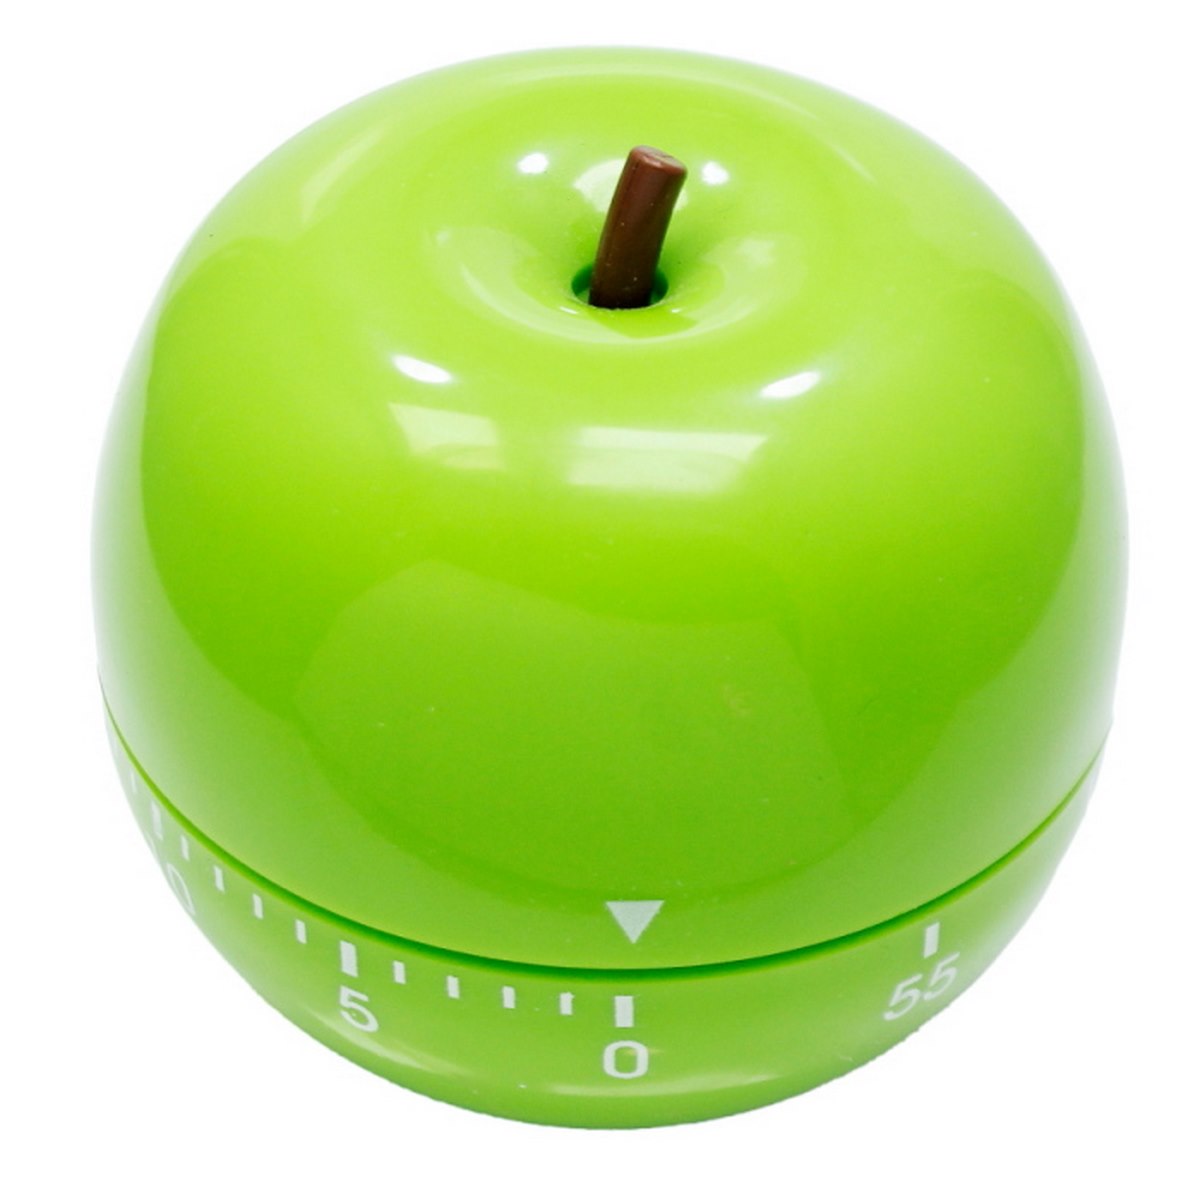 jags-mumbai Sand & Clock Timers Timer 60Minute Green Apple TT005